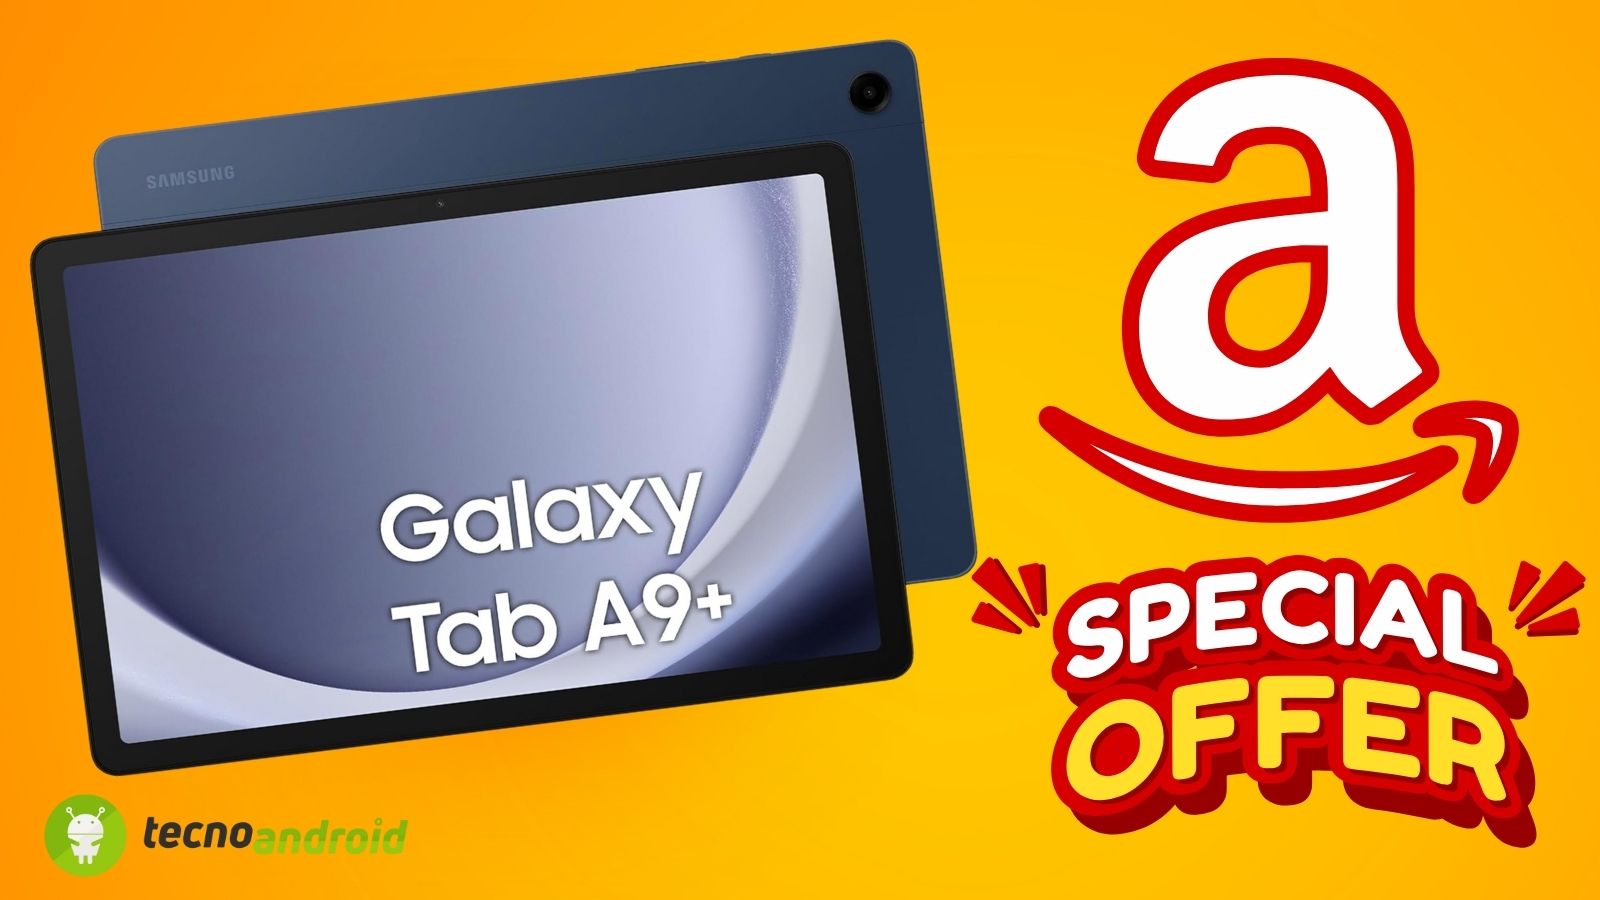 Amazon impazzisce: Offerta GRANDIOSA sul tablet Samsung Galaxy Tab A9+